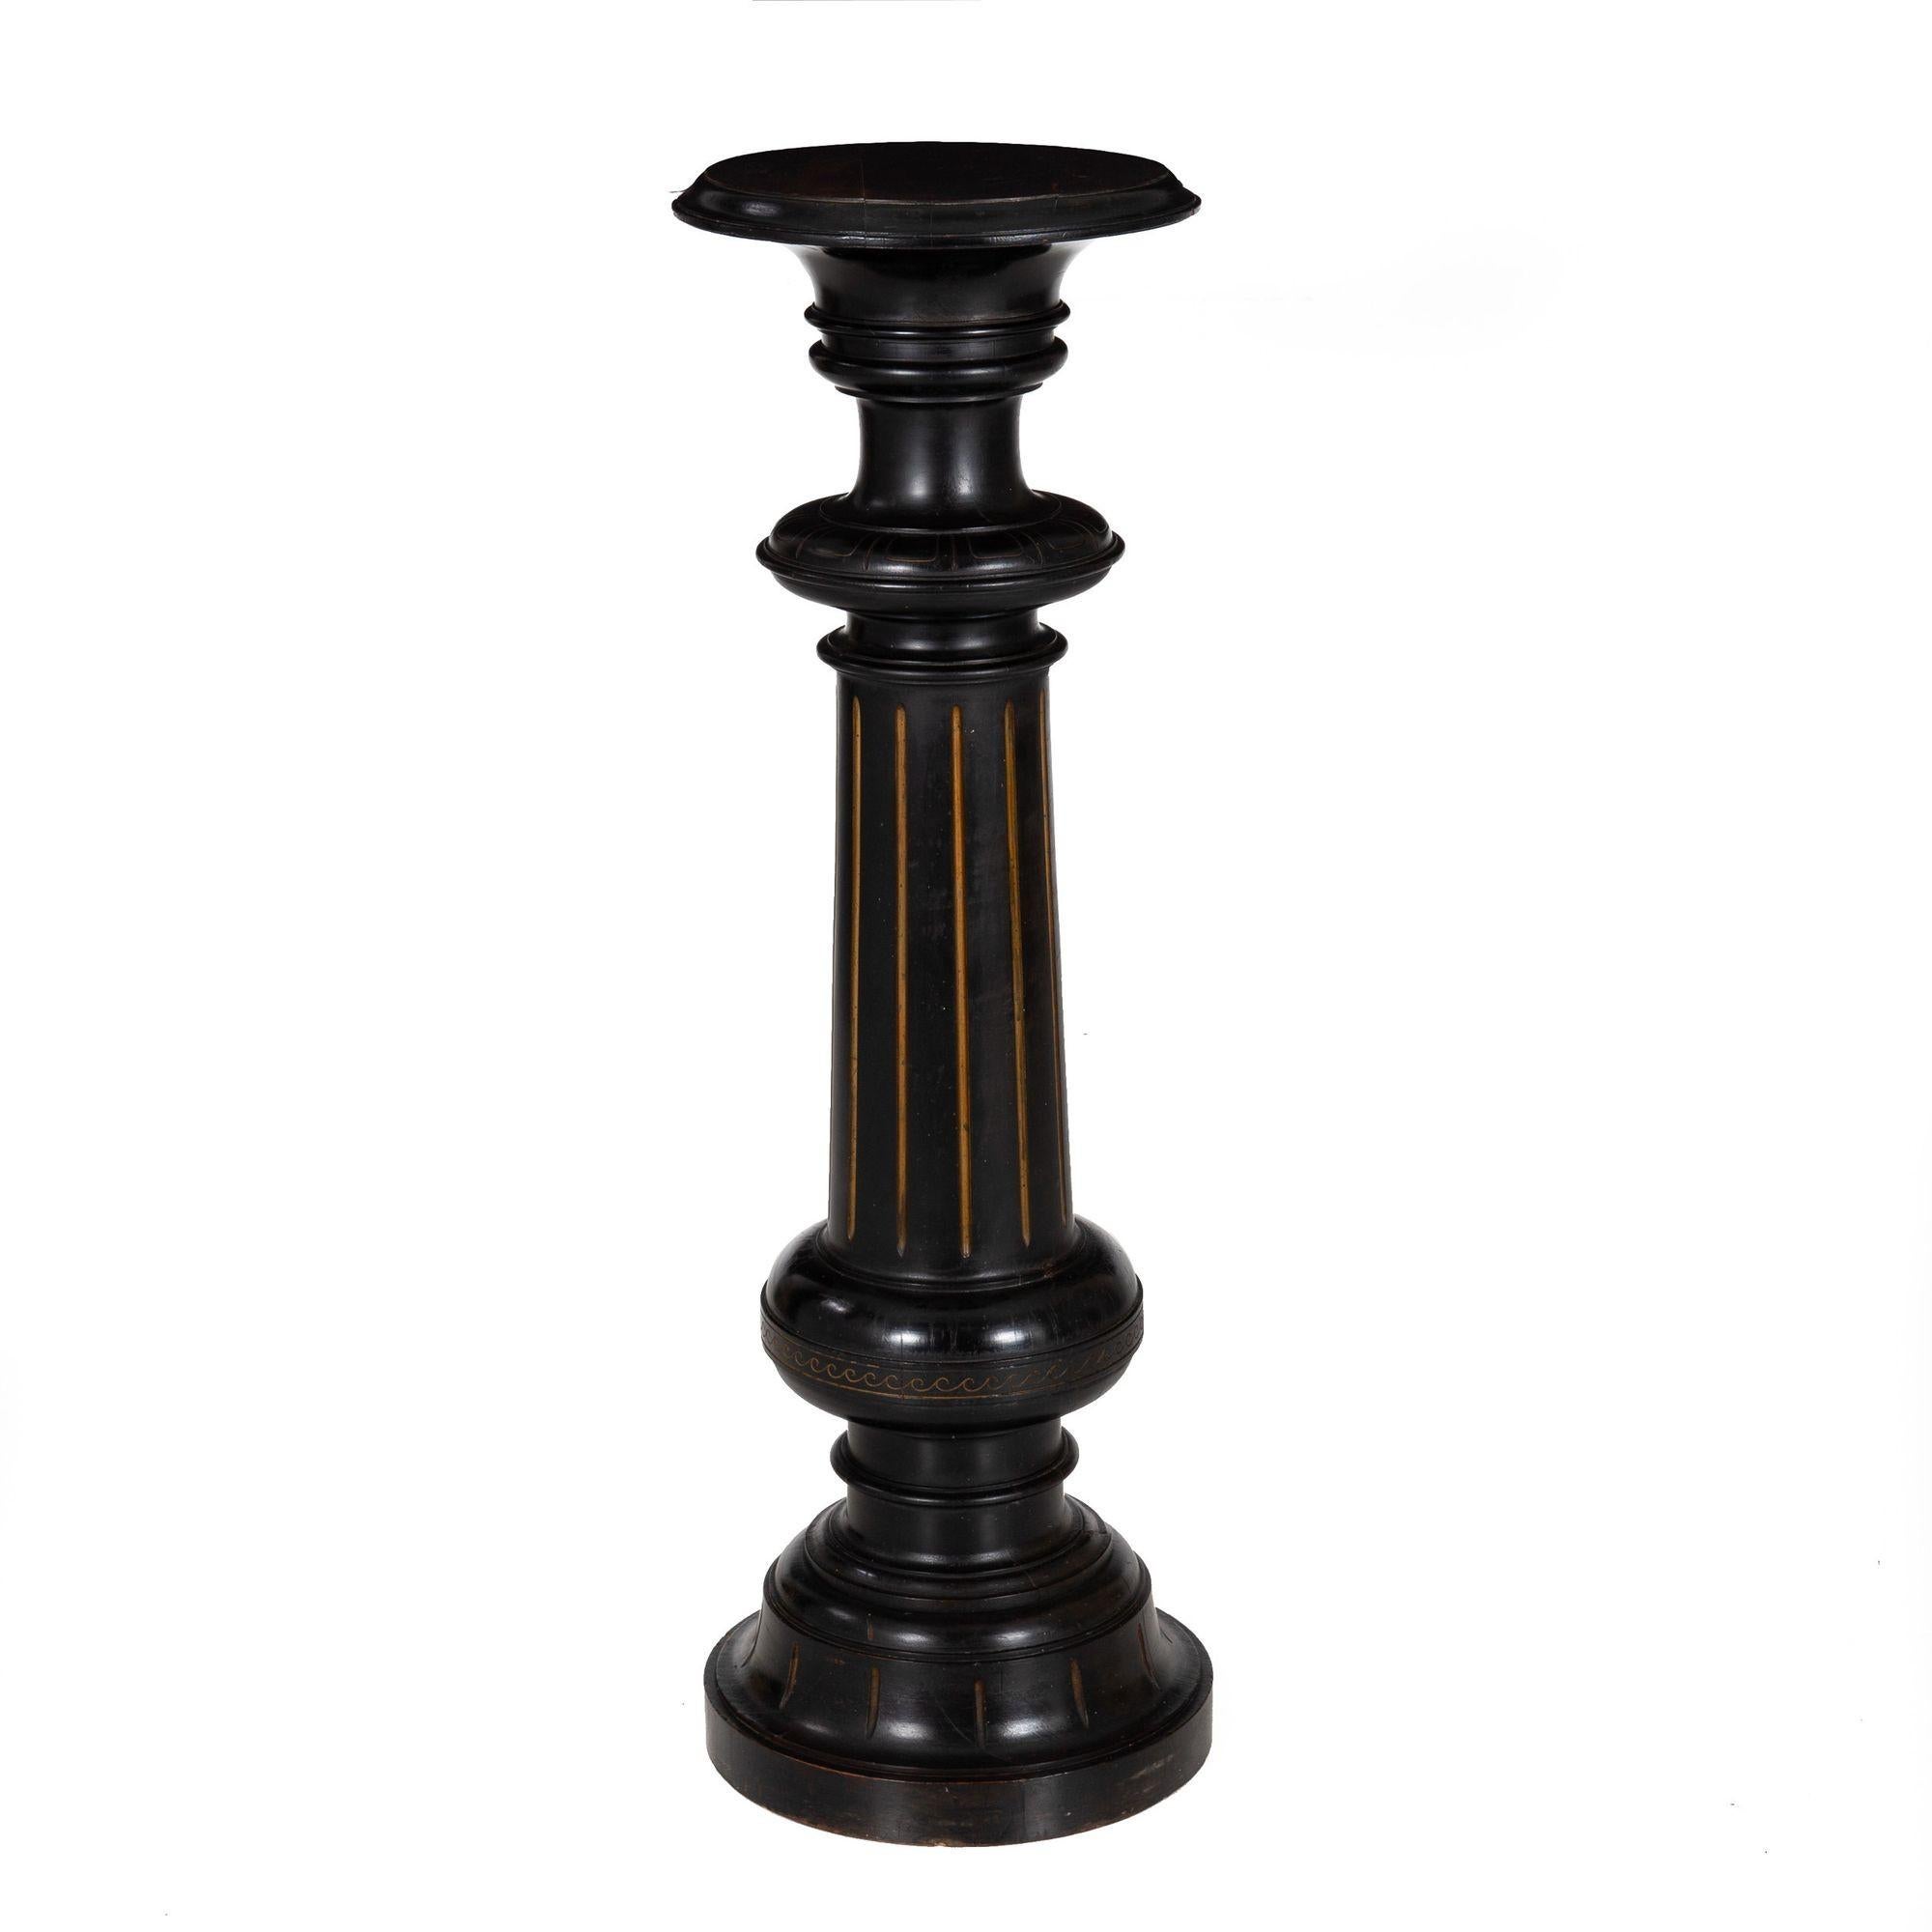 Antique English Victorian Black Ebonized Pedestal circa 1870 In Good Condition For Sale In Shippensburg, PA